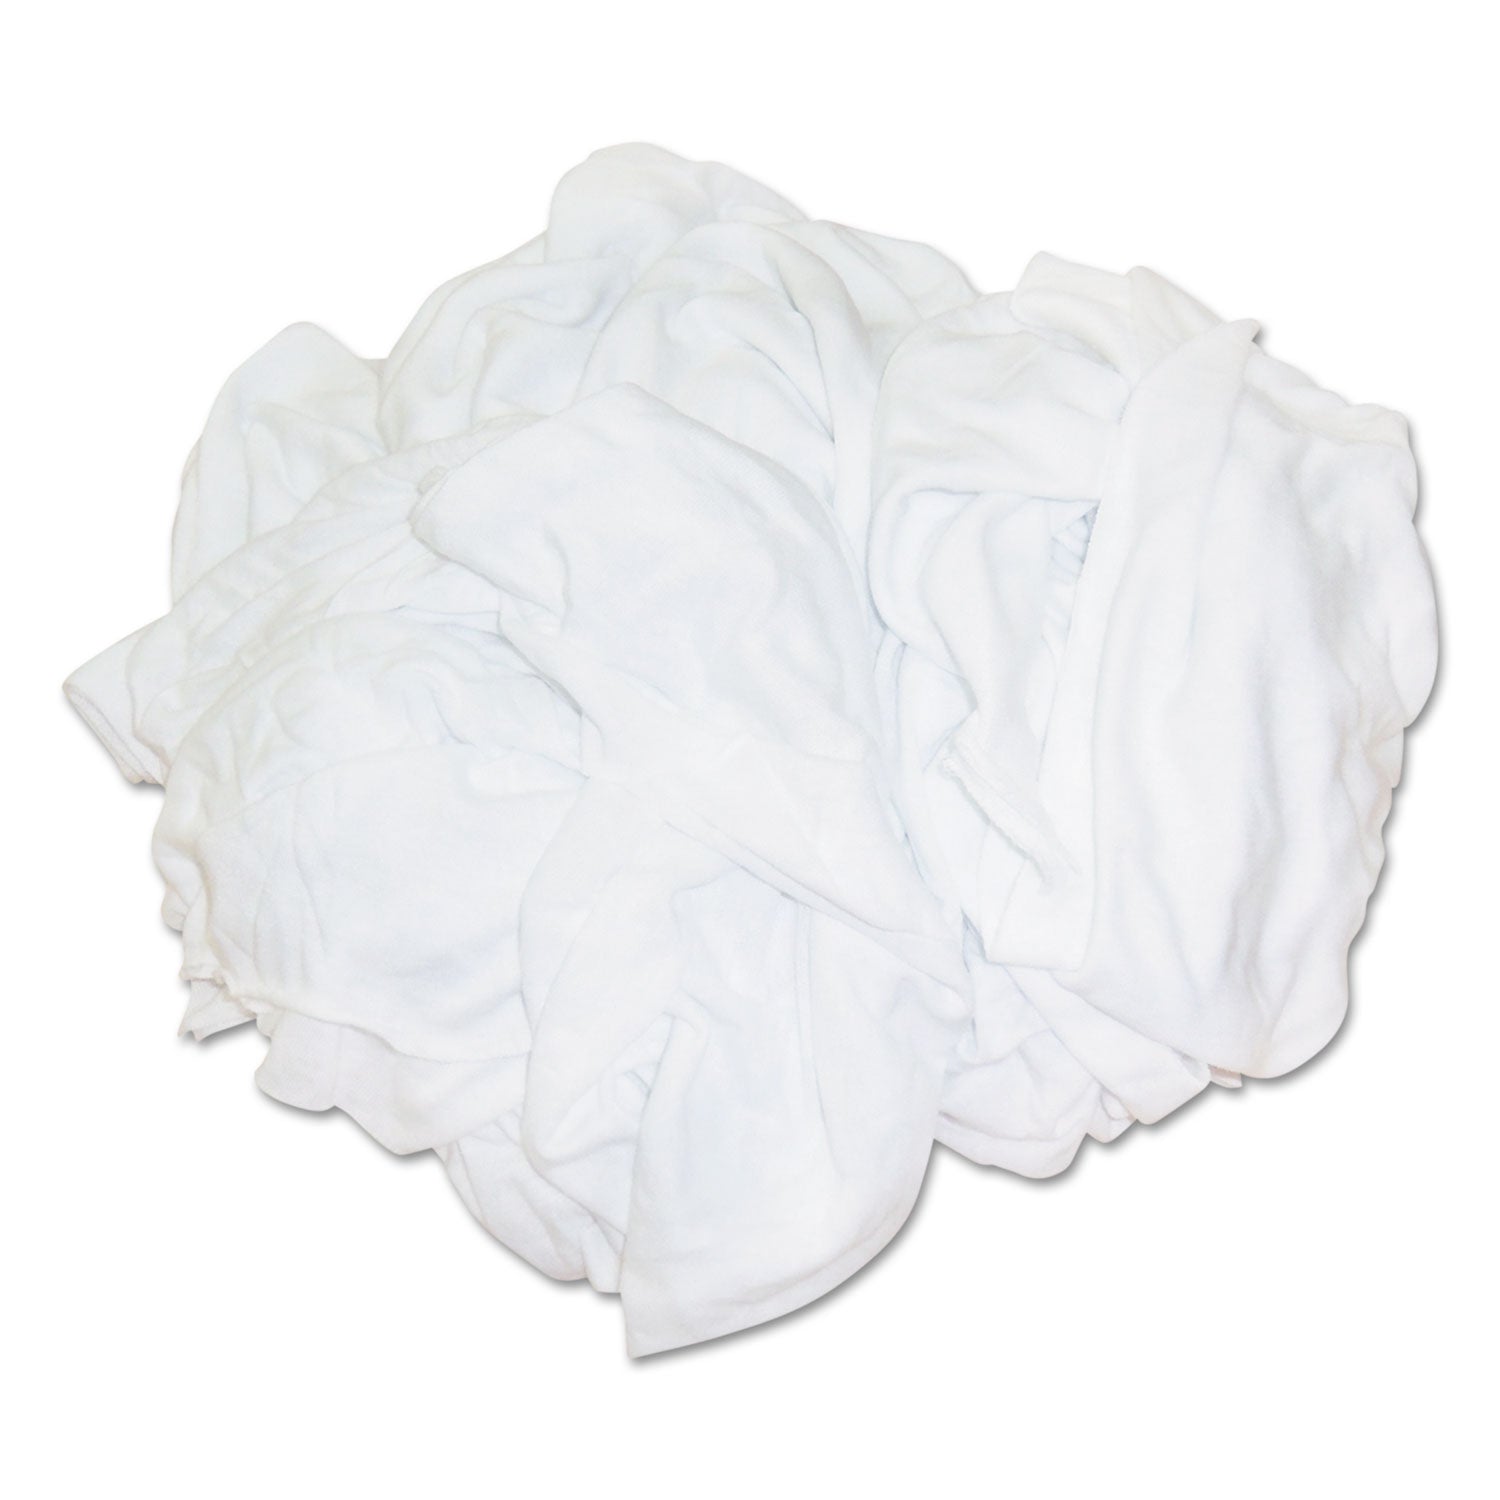 new-bleached-white-t-shirt-rags-multi-fabric-25-lb-polybag_hos45525bp - 1